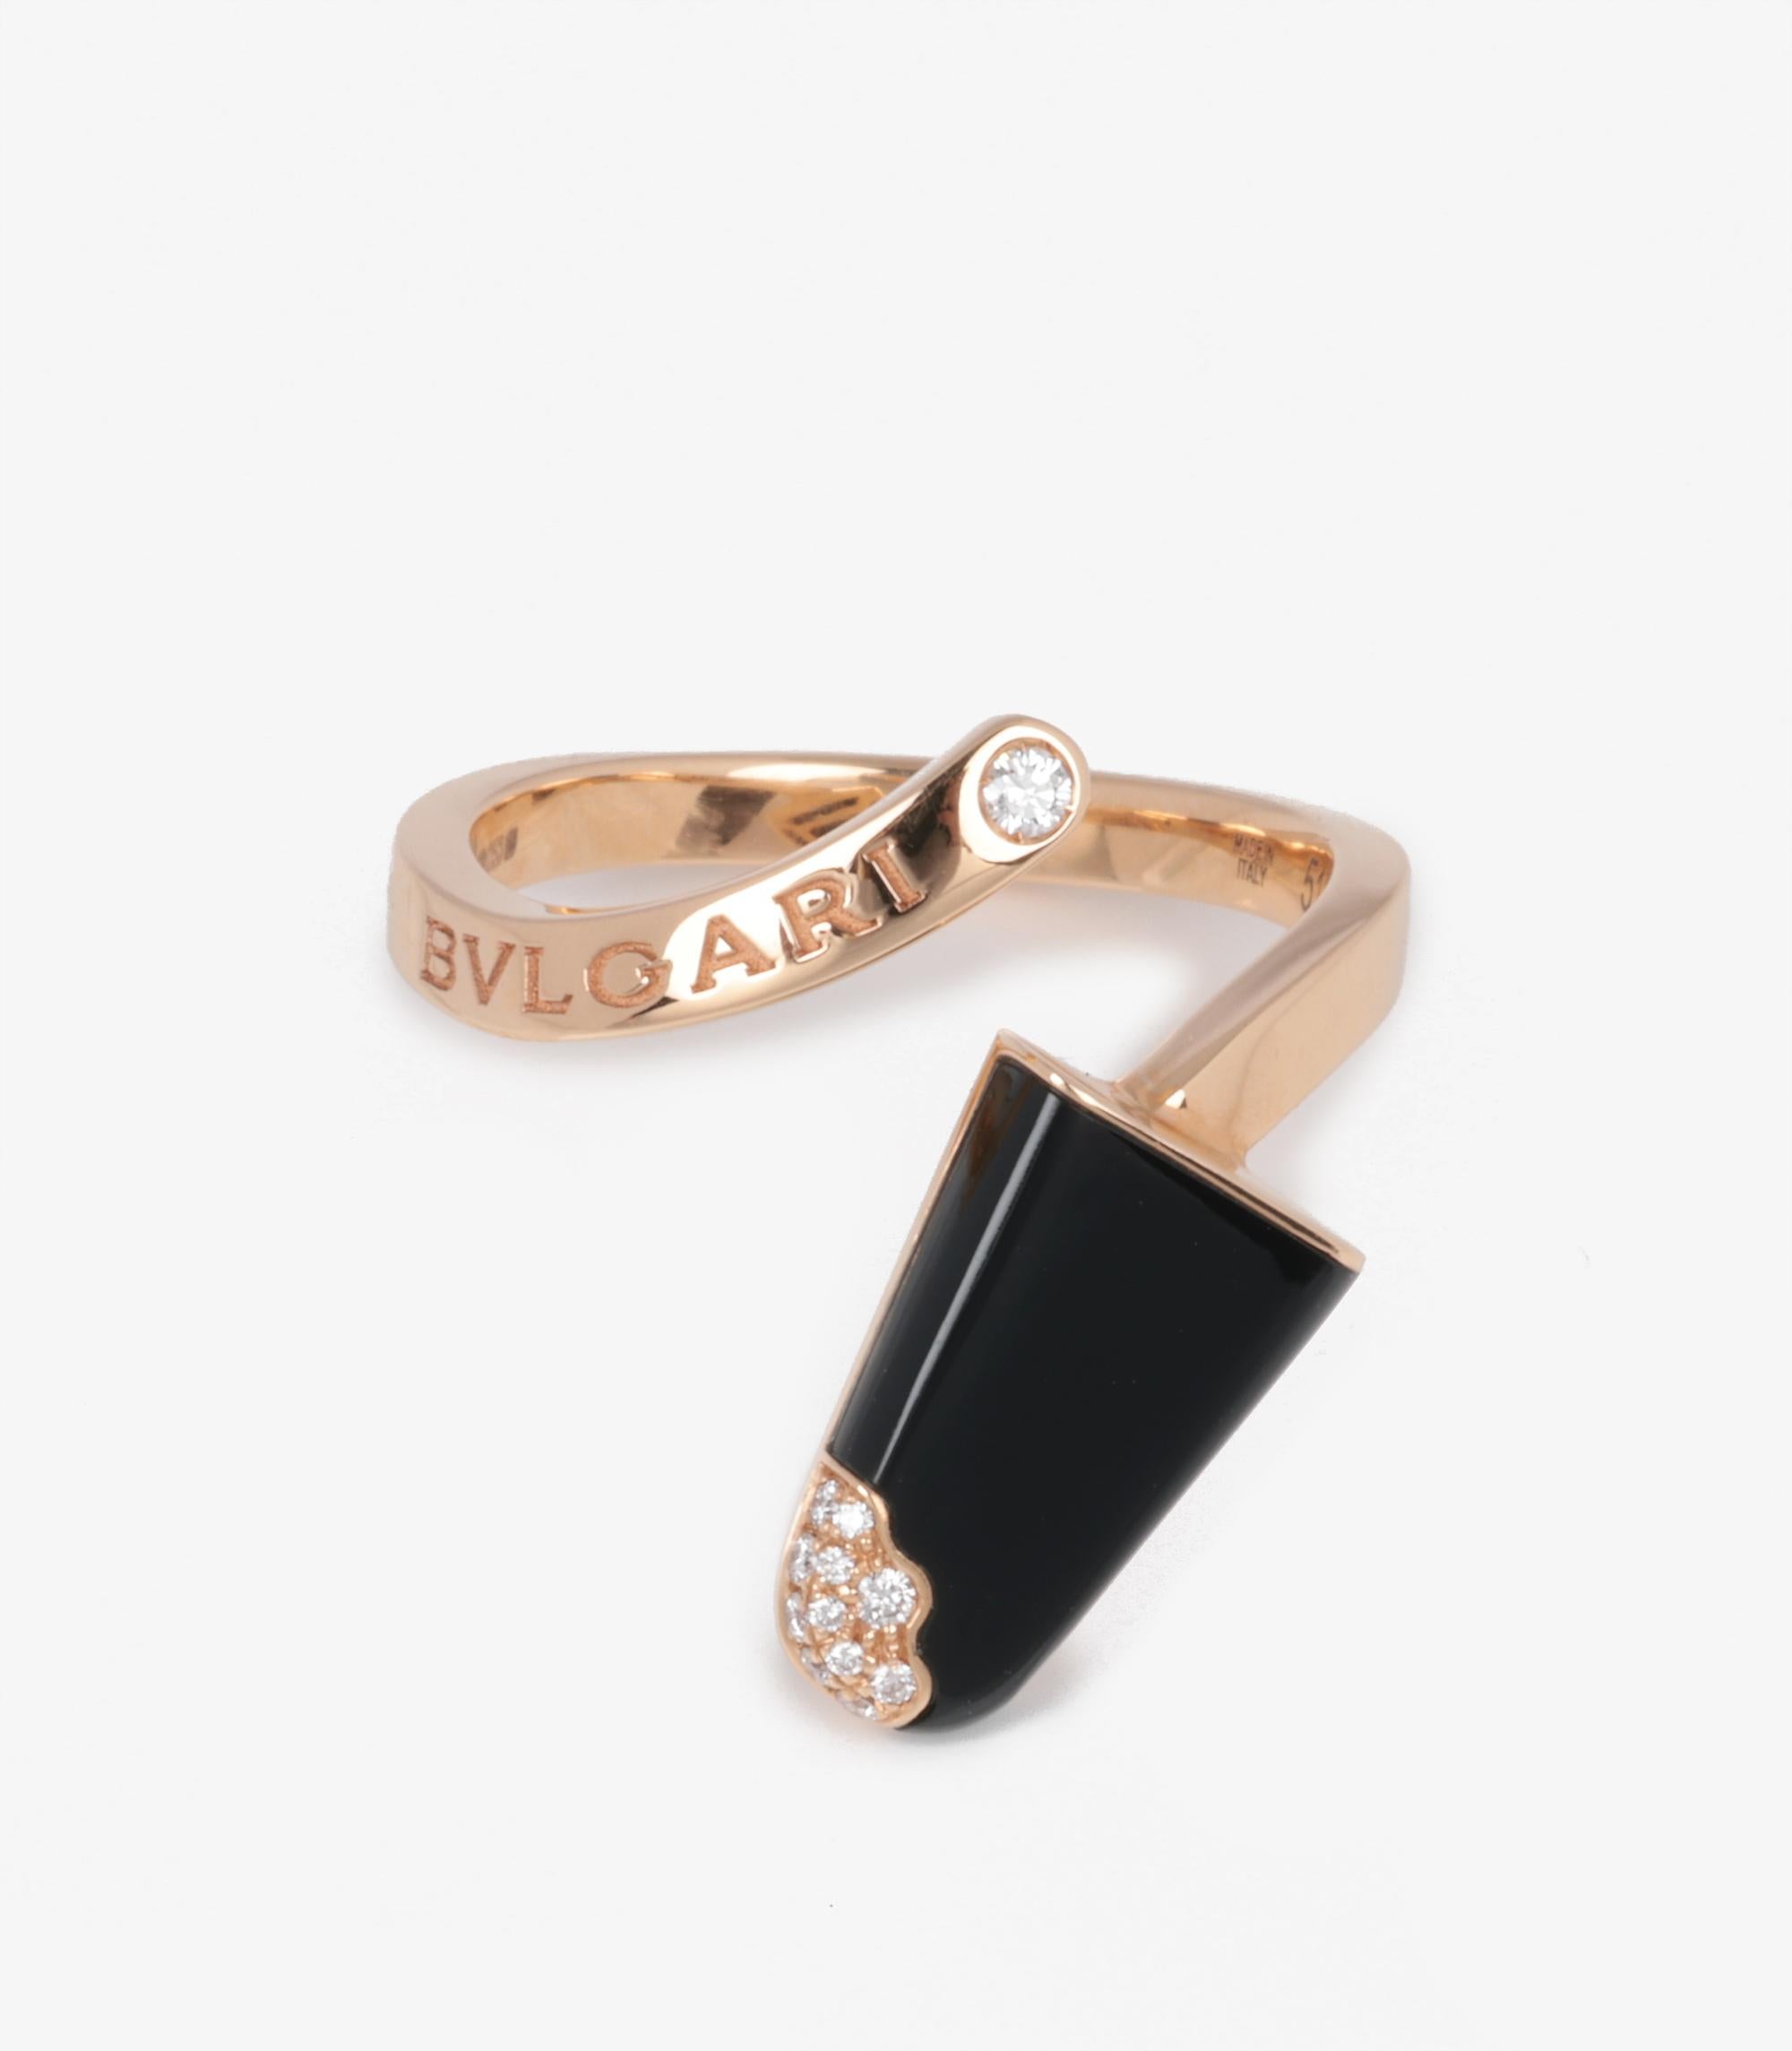 Bulgari Diamond And Onyx 18ct Rose Gold Gelati Ring

Brand- Bulgari
Model- Diamond and Onyx Gelati Ring
Product Type- Ring
Serial Number- MK****
Age- Circa 2023
Accompanied By- Bulgari Box, Certificate
Material(s)- 18ct Rose Gold
Gemstone-